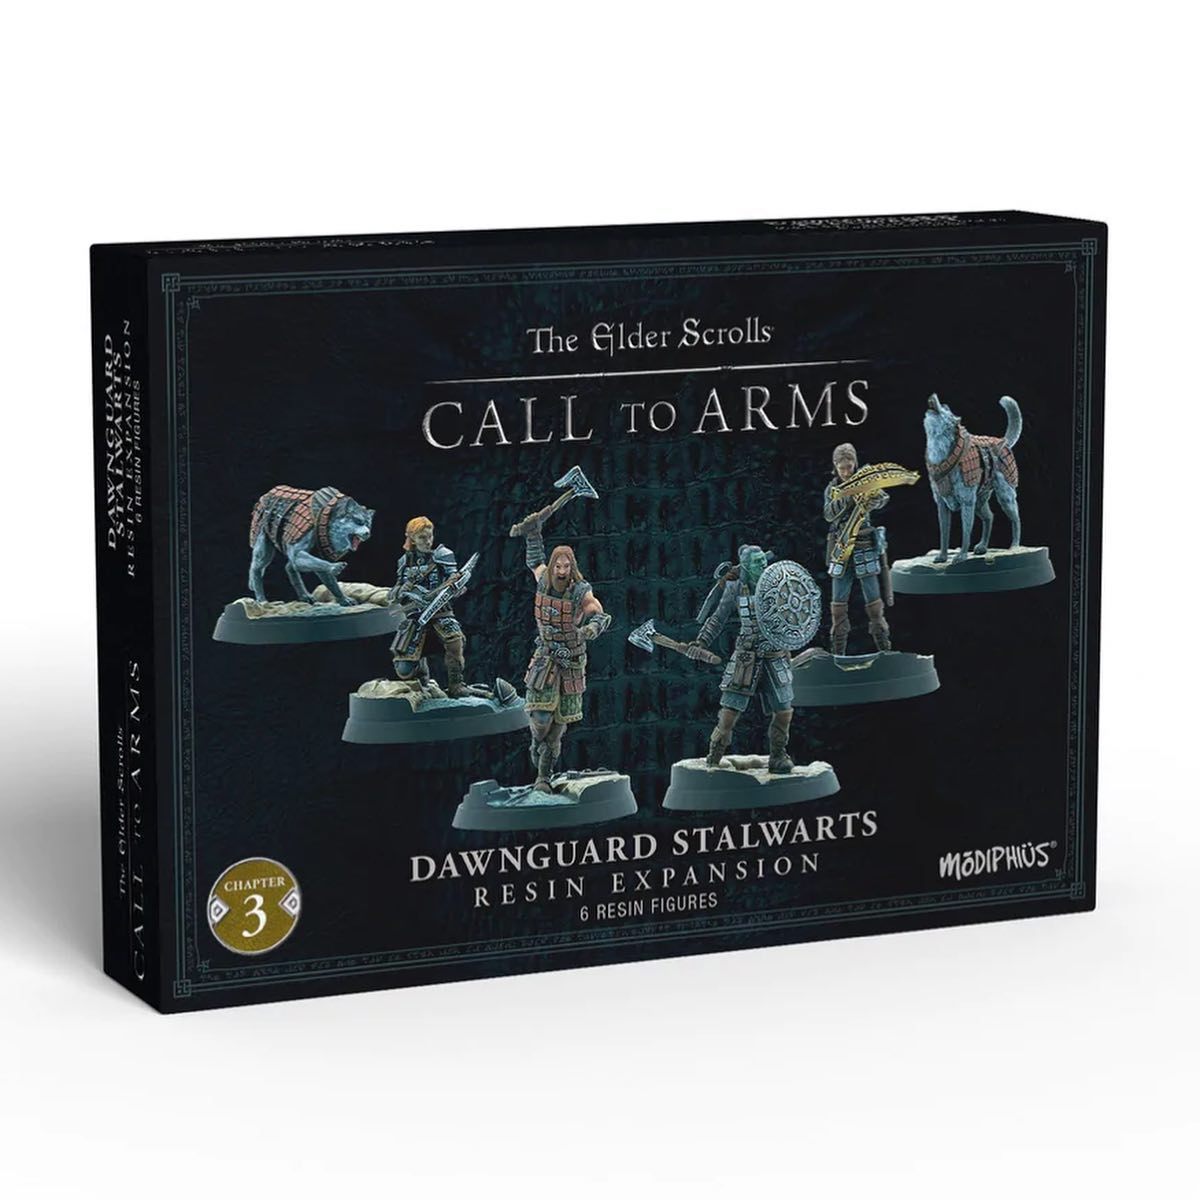 Dawnguard Stalwarts Box - The Elder Scrolls Call To Arms